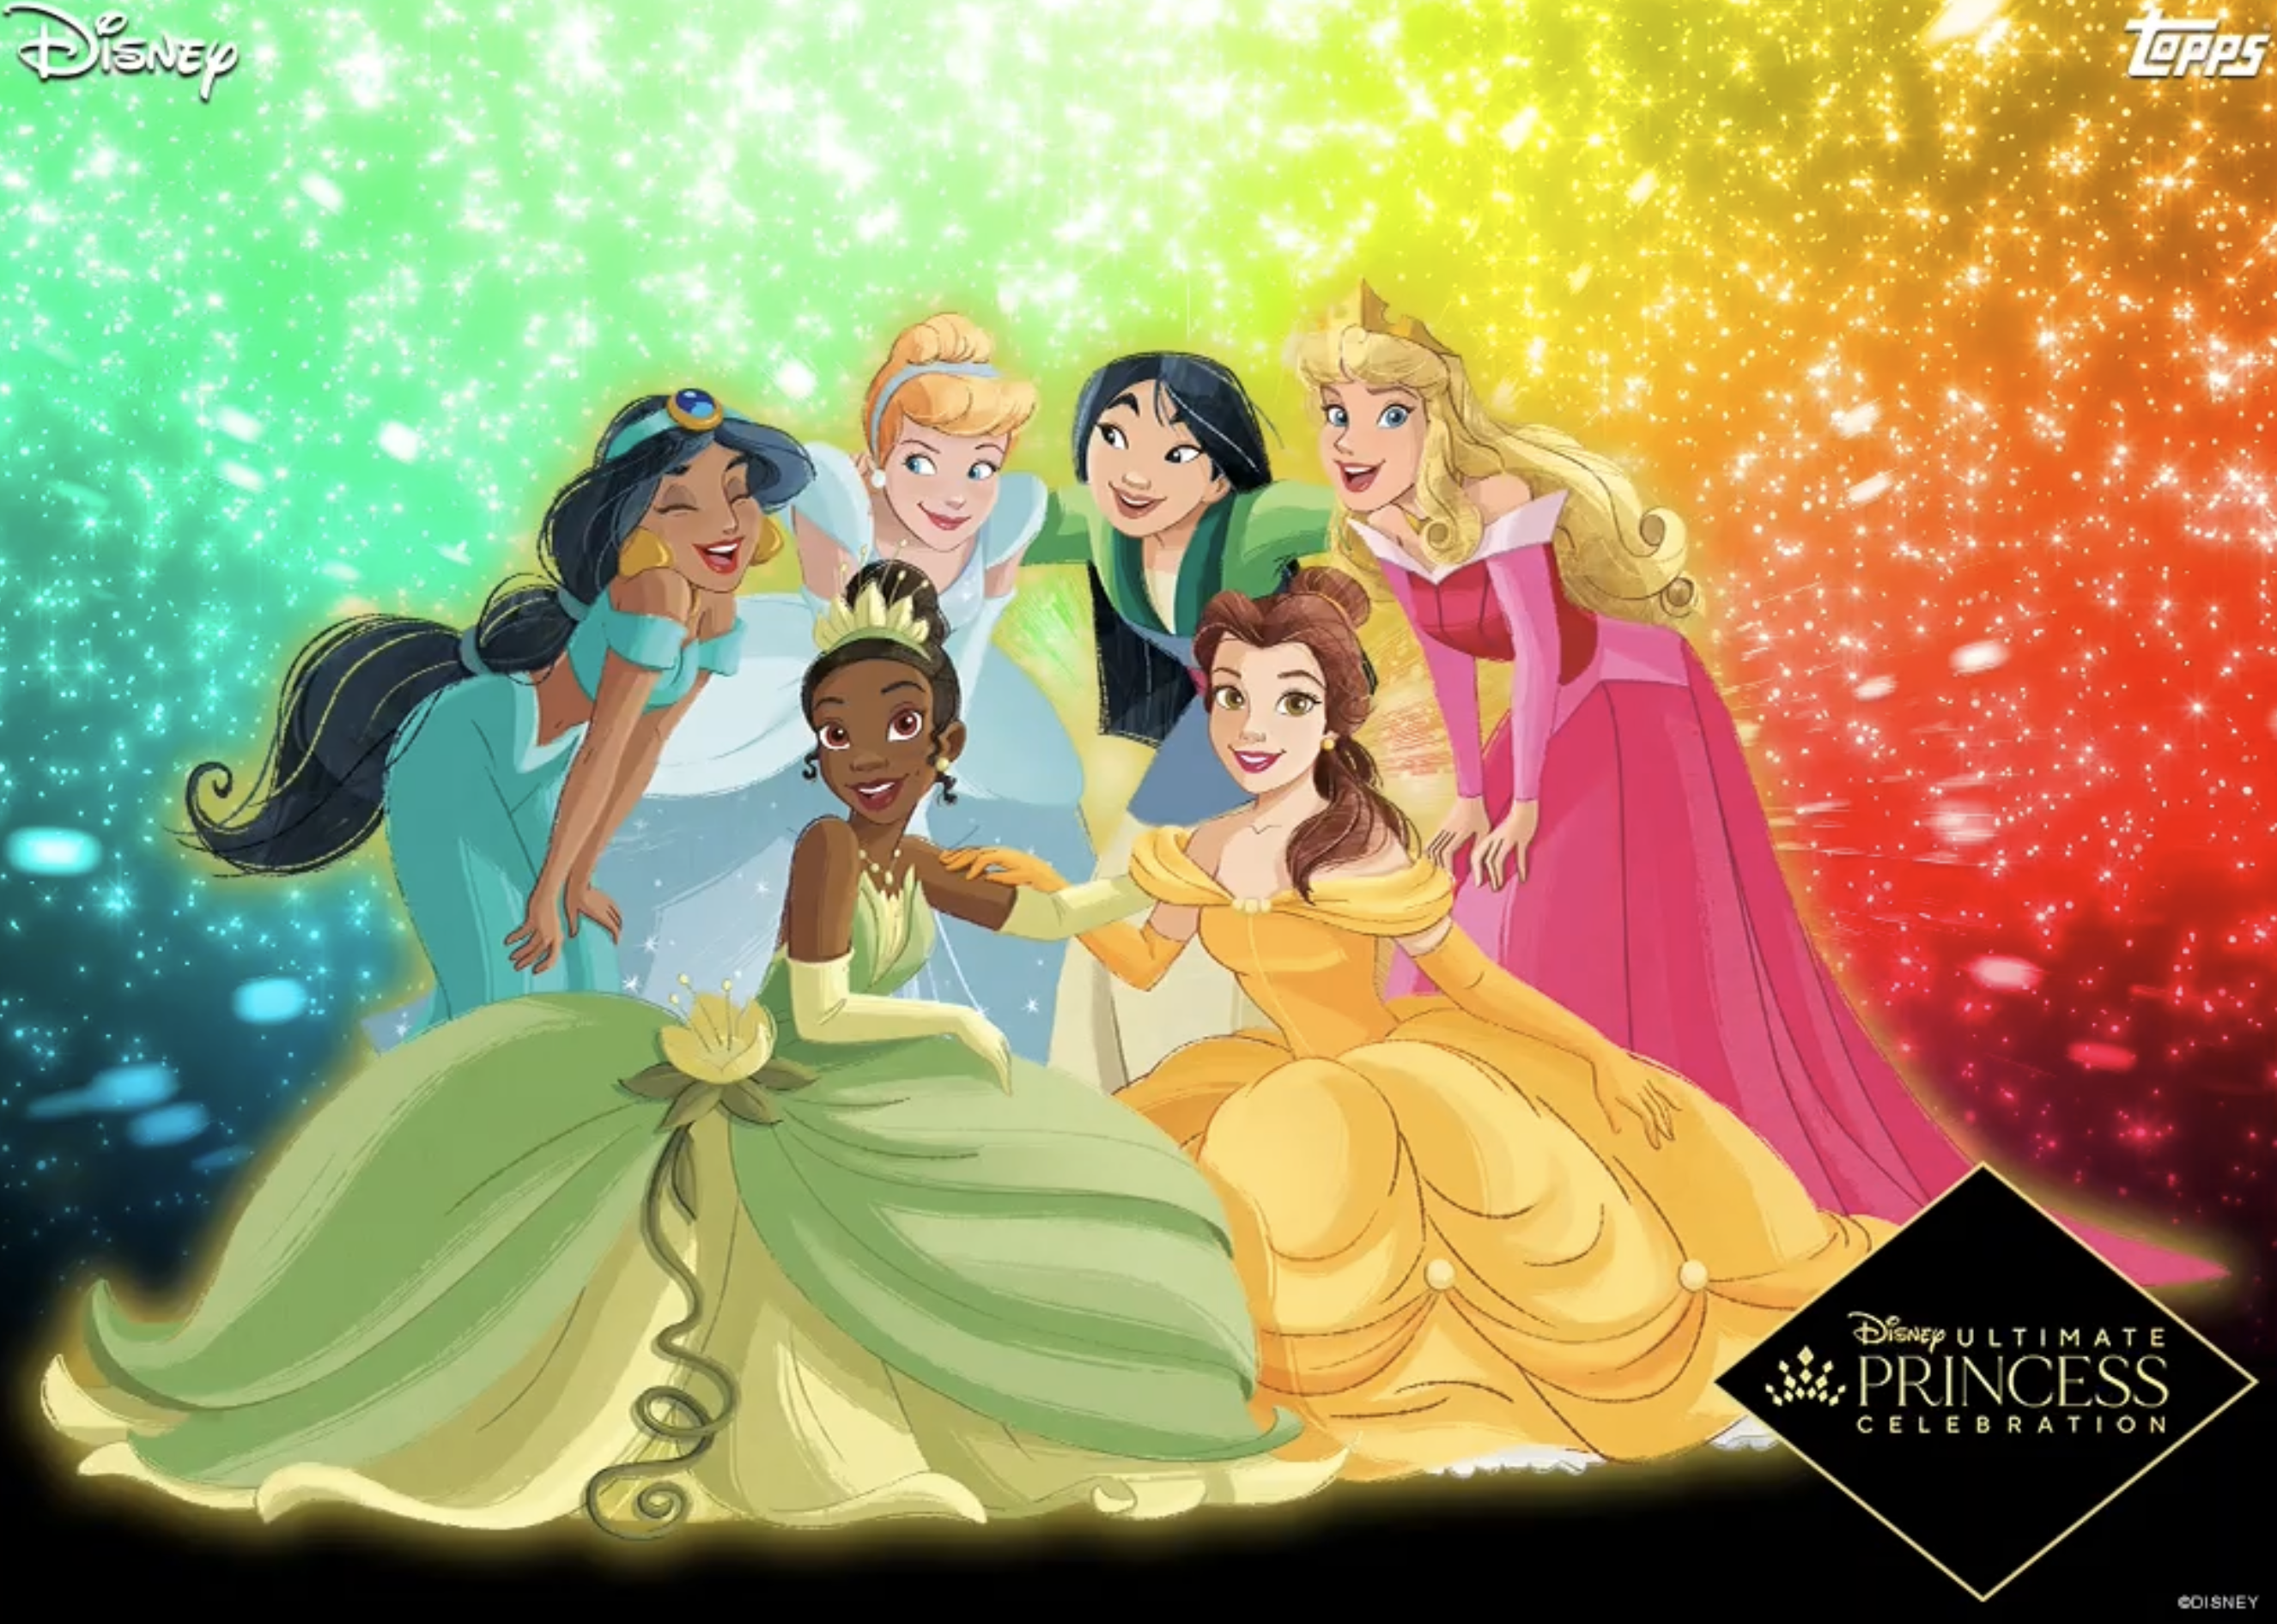 Topps joins Disney's World Princess Week Celebration